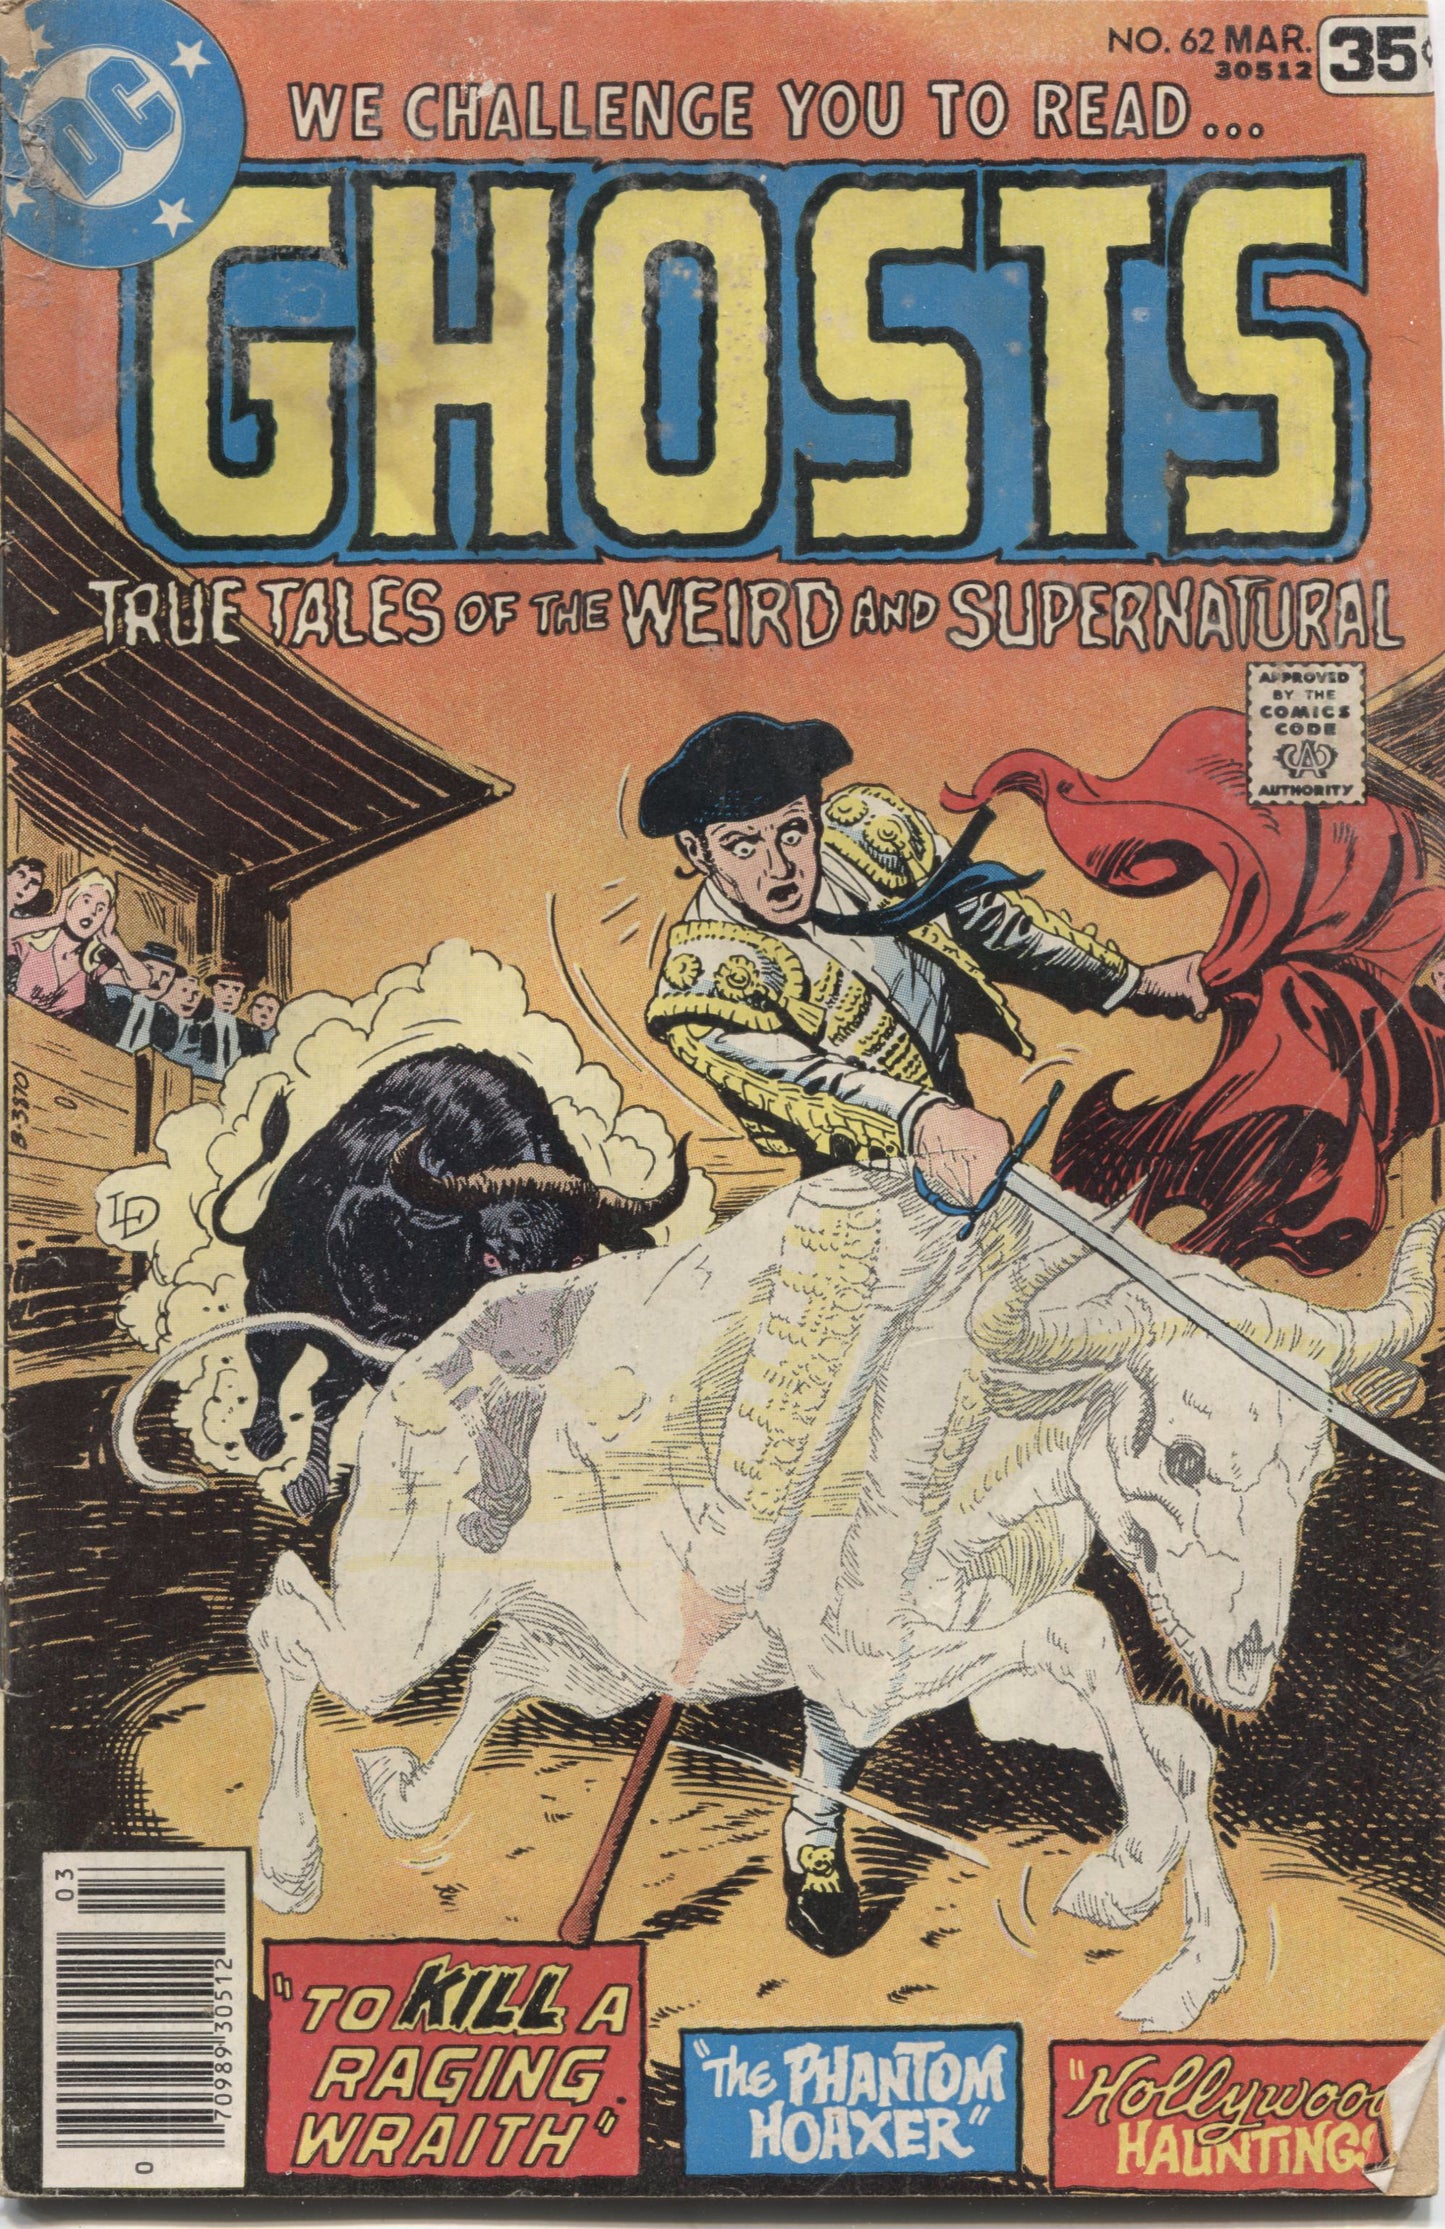 Ghosts No. 62, DC Comics, March 1978